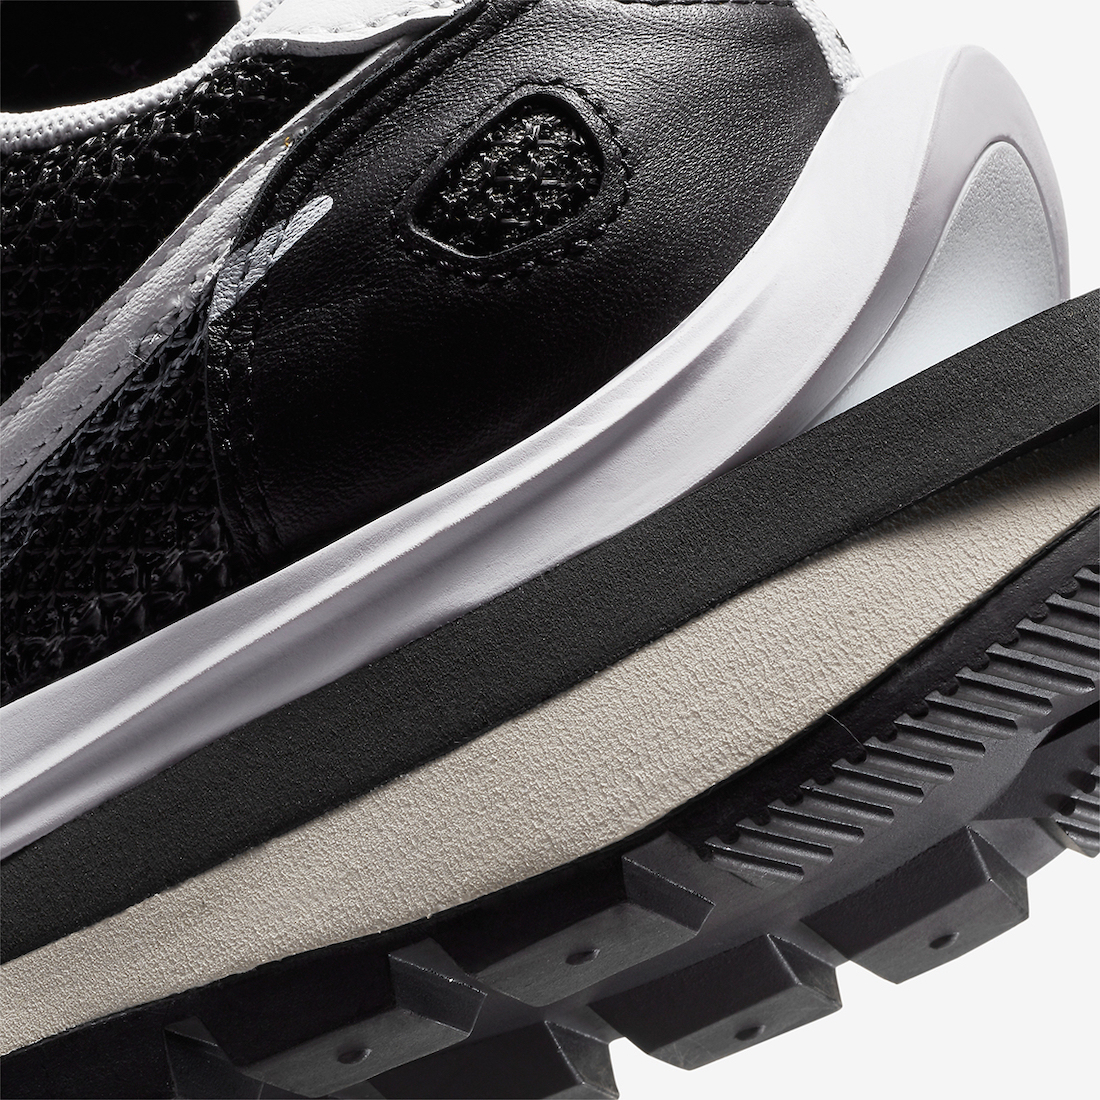 Sacai Nike VaporWaffle Black CV1363-001 Release Date